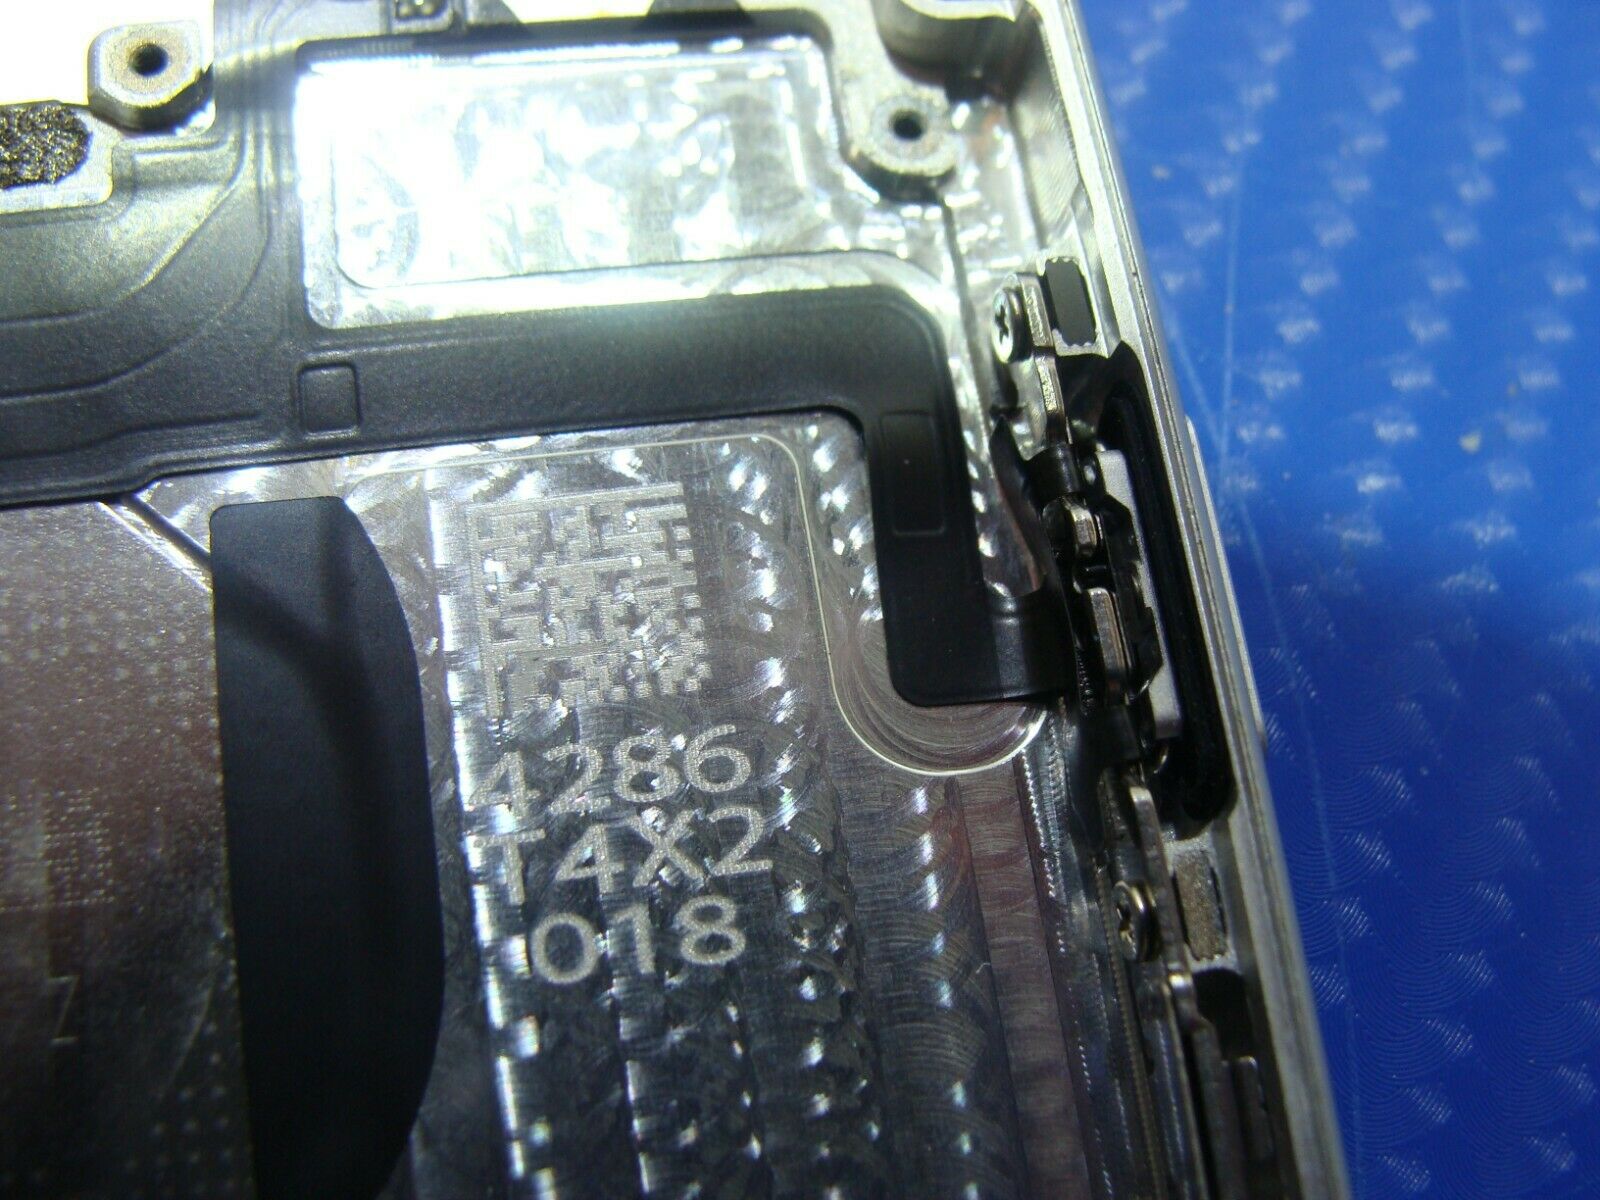 Apple iPhone 6 A1549 MG5X2LL/A 2014 4.7